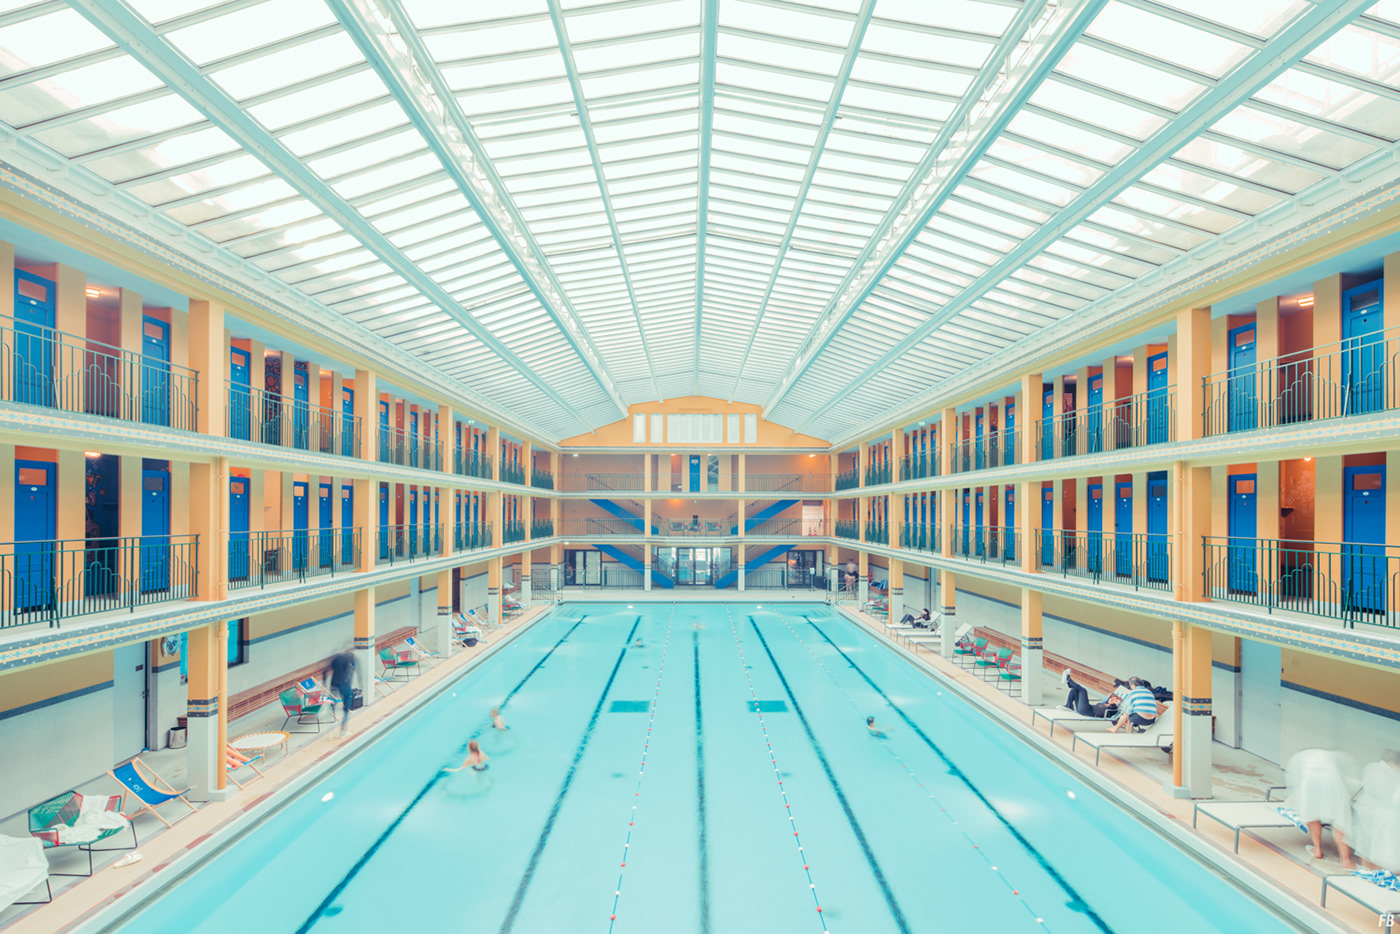 Swimmingpool architecture lifestyle design blue yellow orange symmetry lines Paris